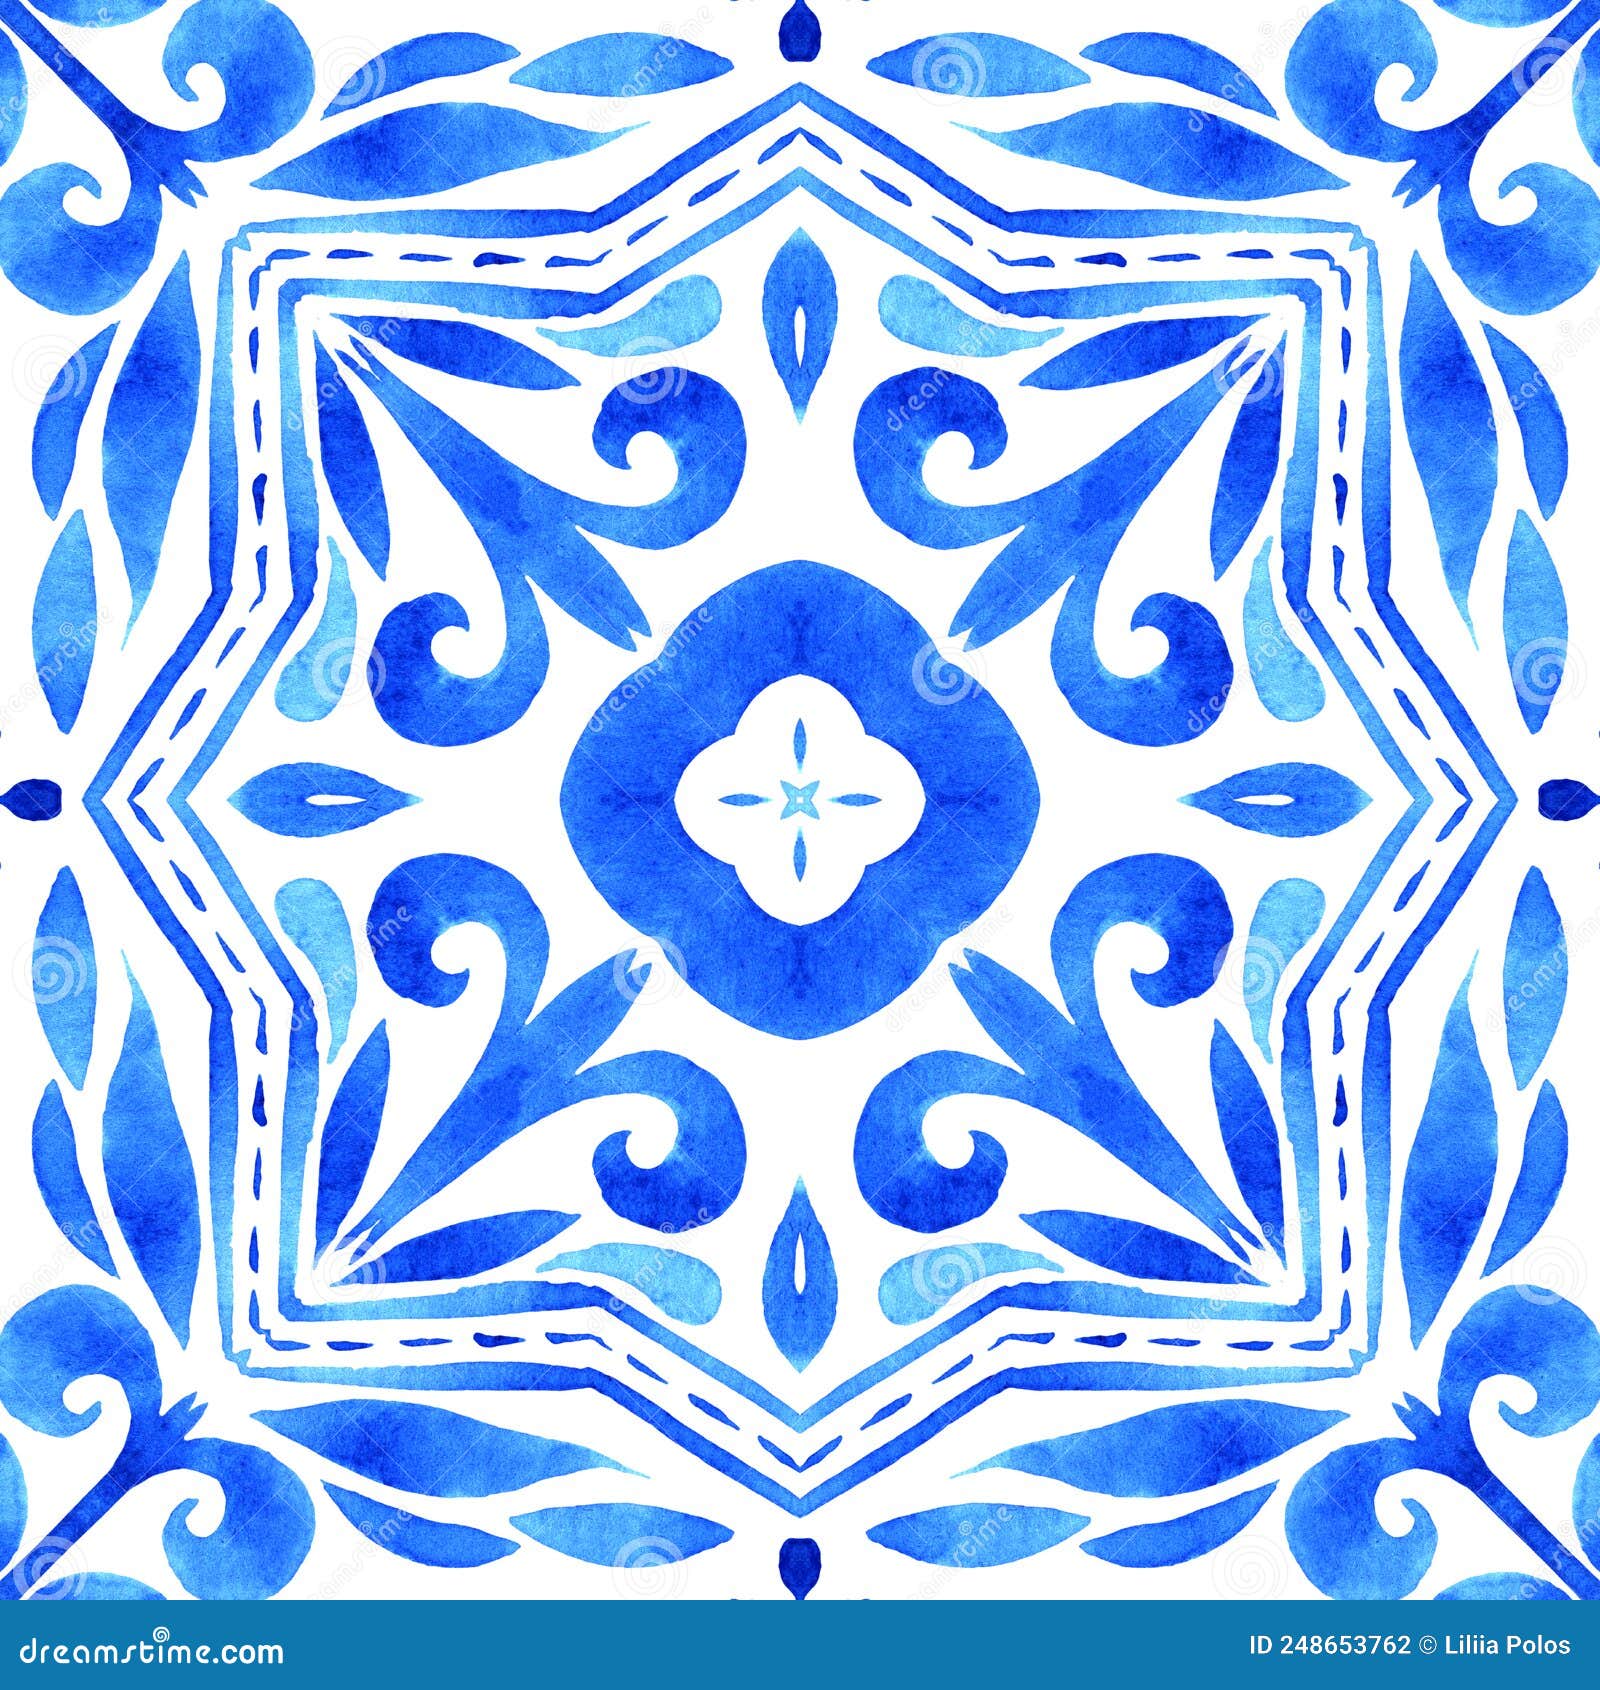 azulejos - portuguese tile blue watercolor pattern. traditional ornament.